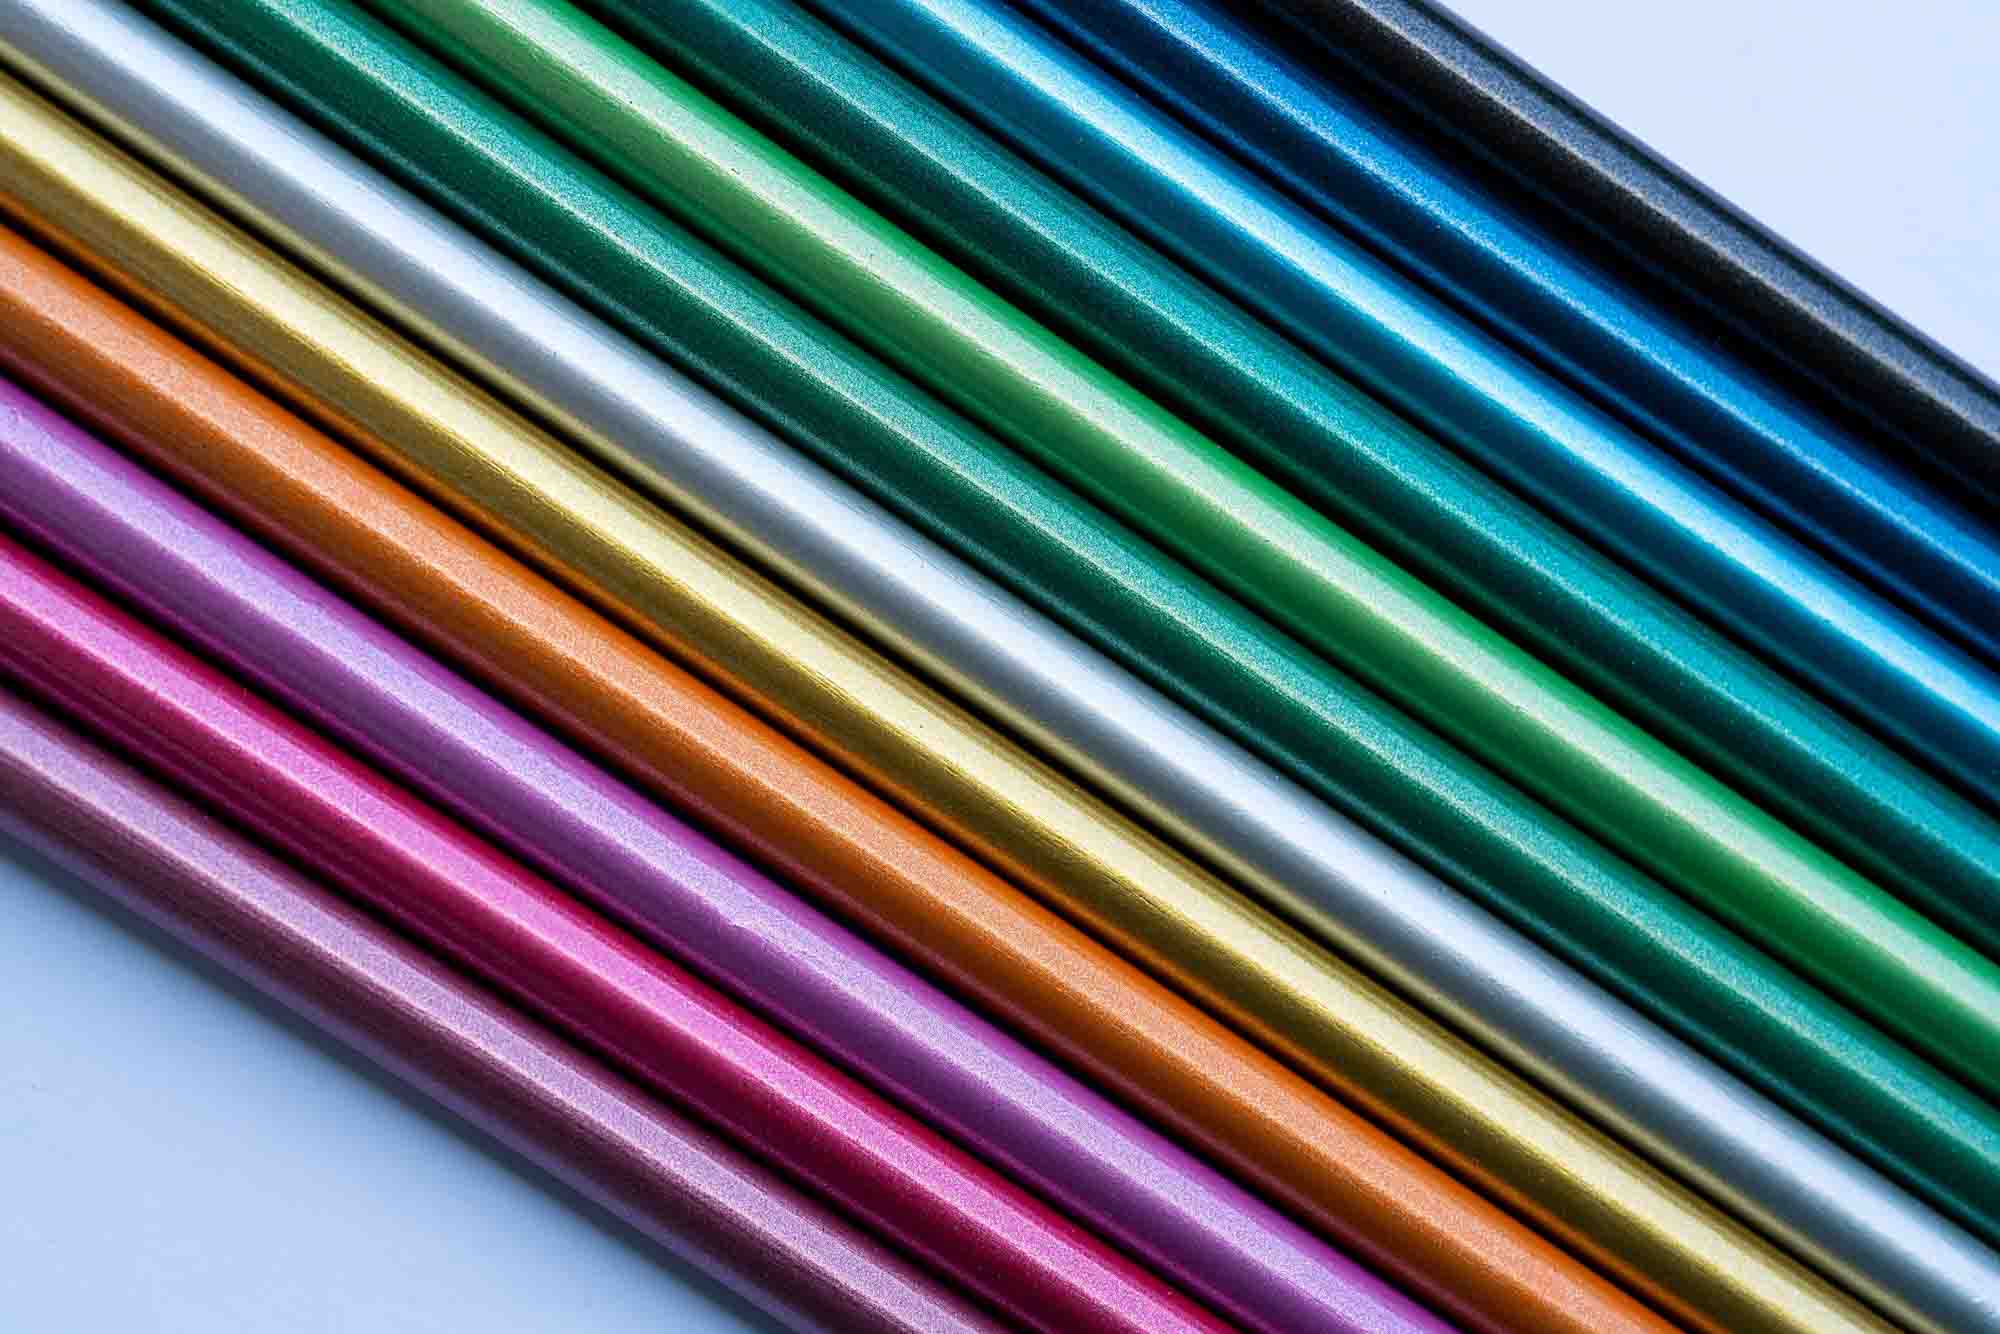 Colorful pencils in metallic colors